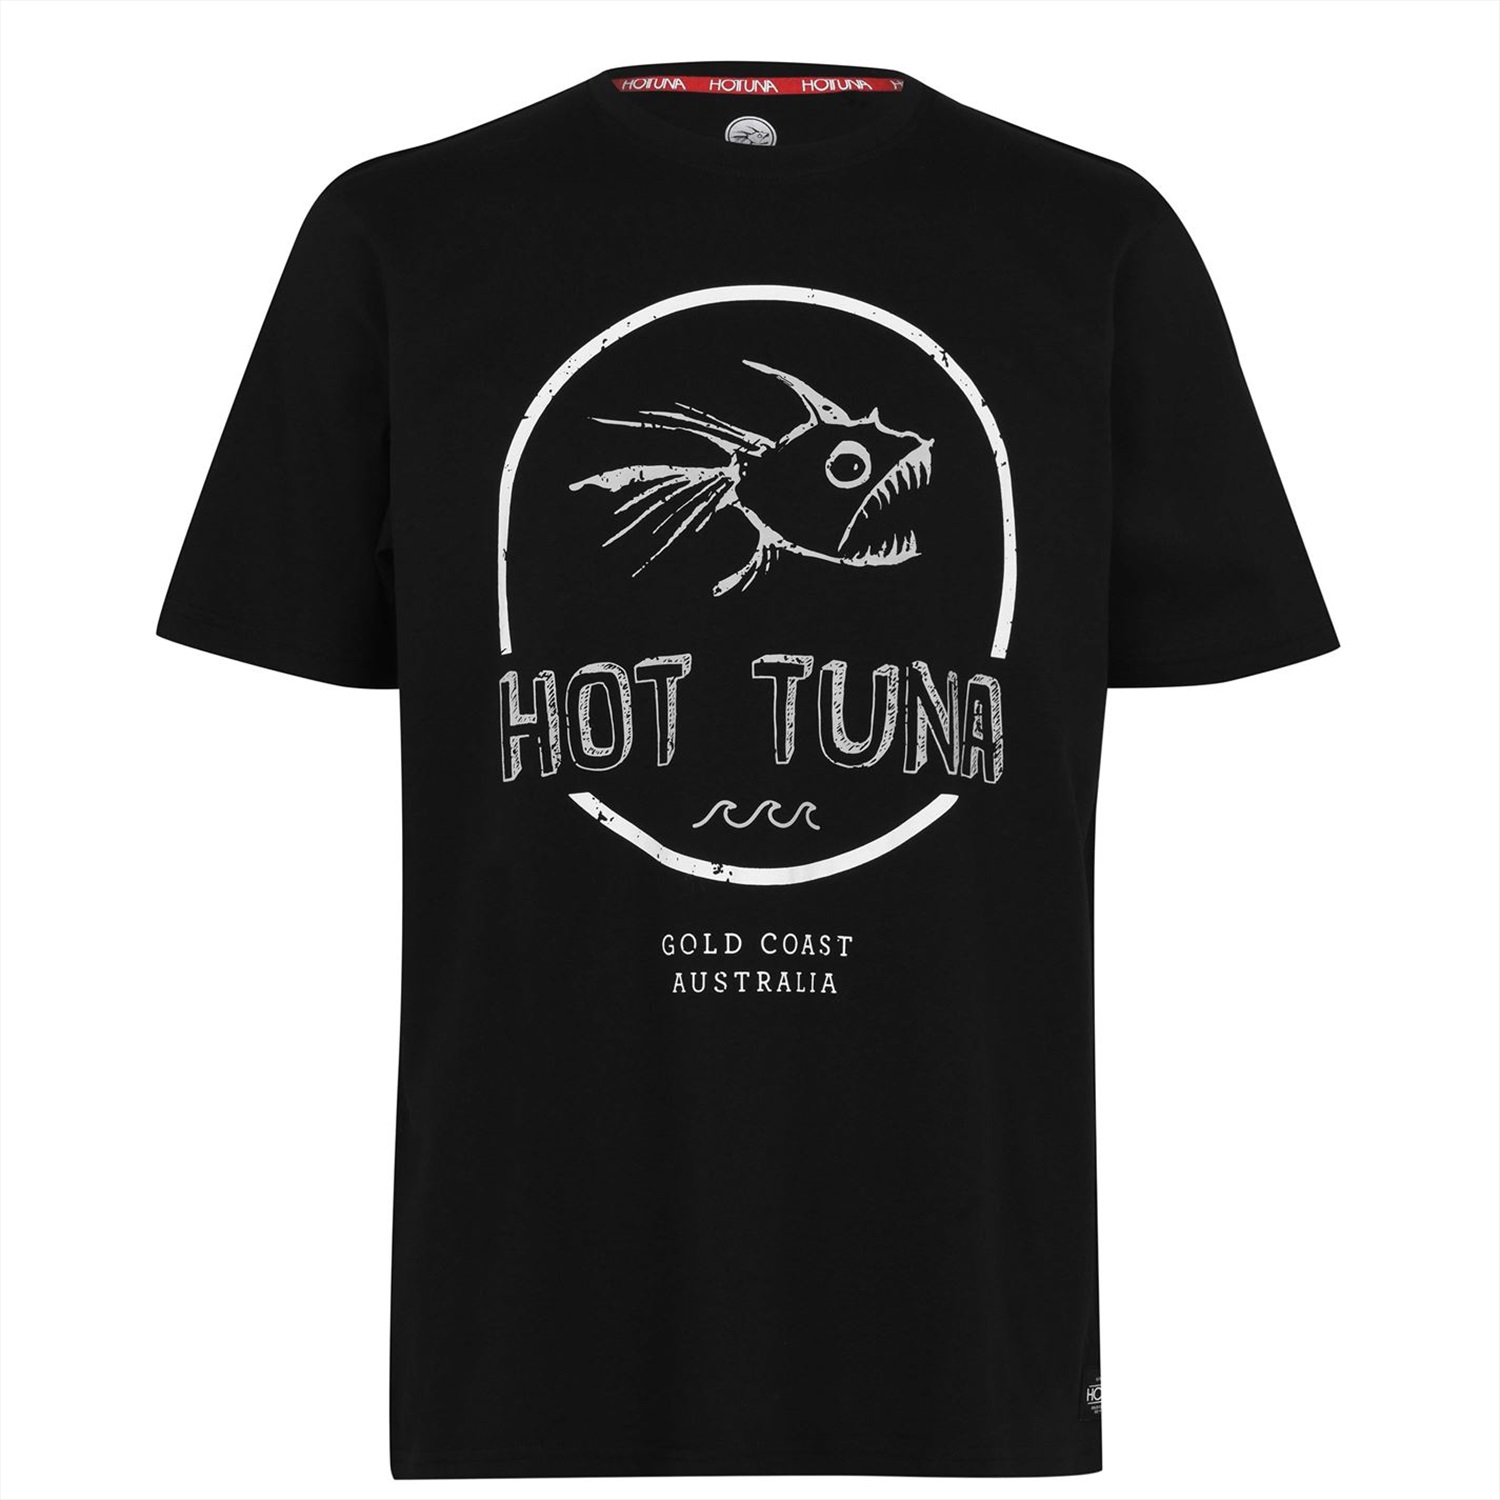 Hot Tuna, Crew T Shirt Mens.